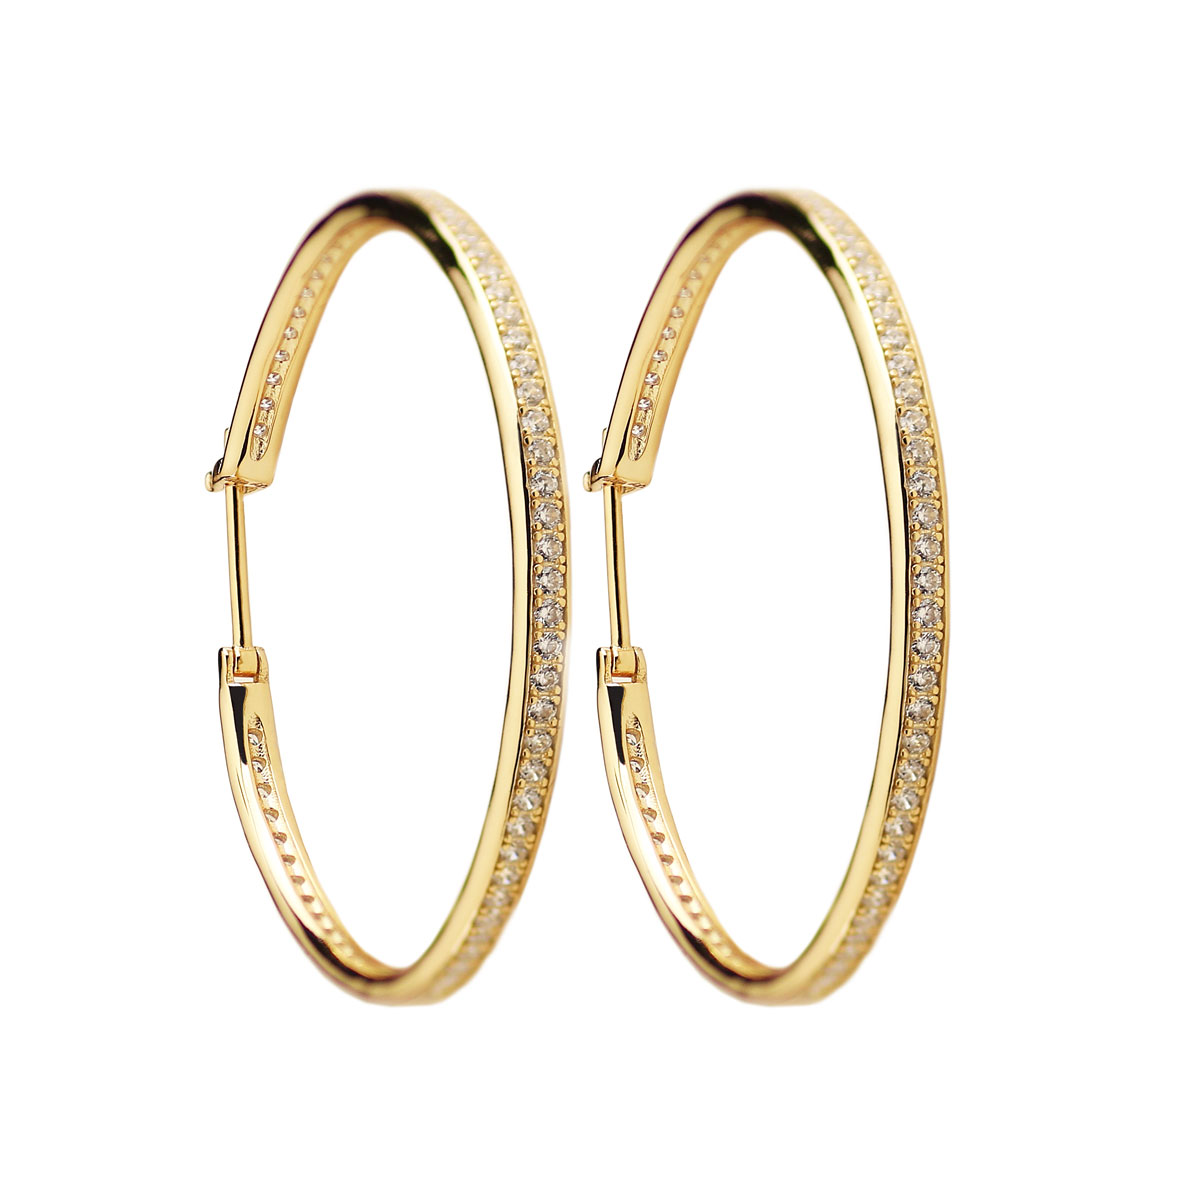 Cashs Ireland, Gold and Crystal 43.5mm Hoop Pierced Earrings